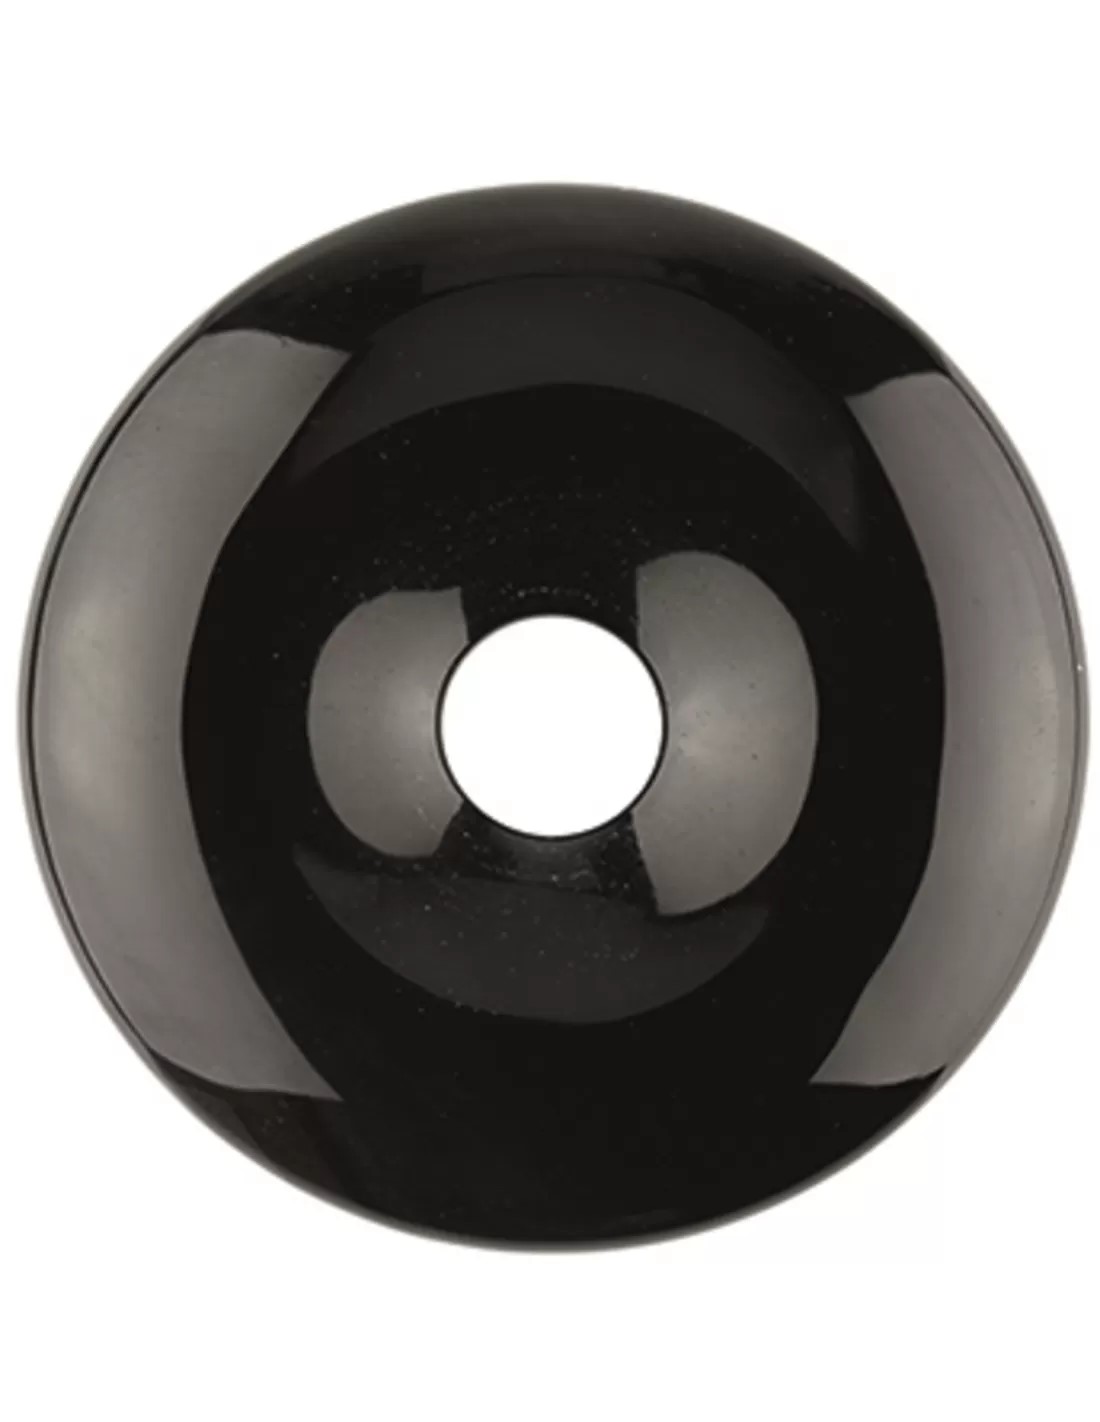 Edelsteen Donut Obsidiaan Zwart 50mm 